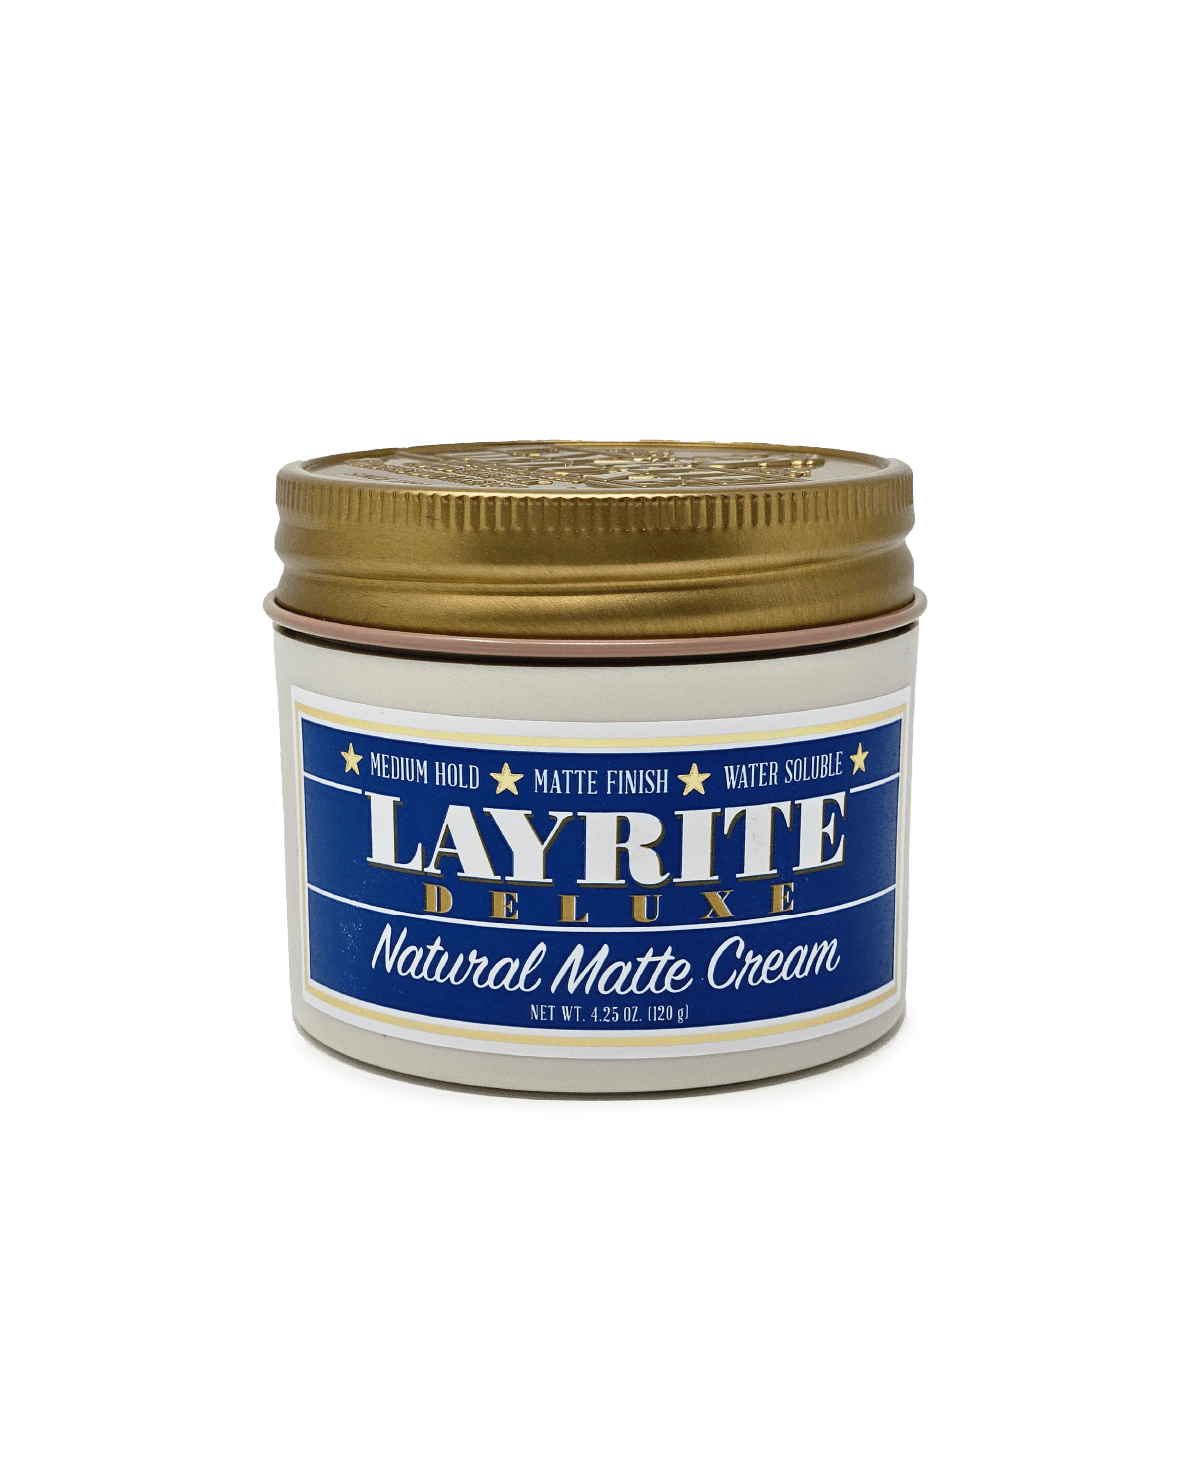 Layrite Deluxe Natural Matte Cream